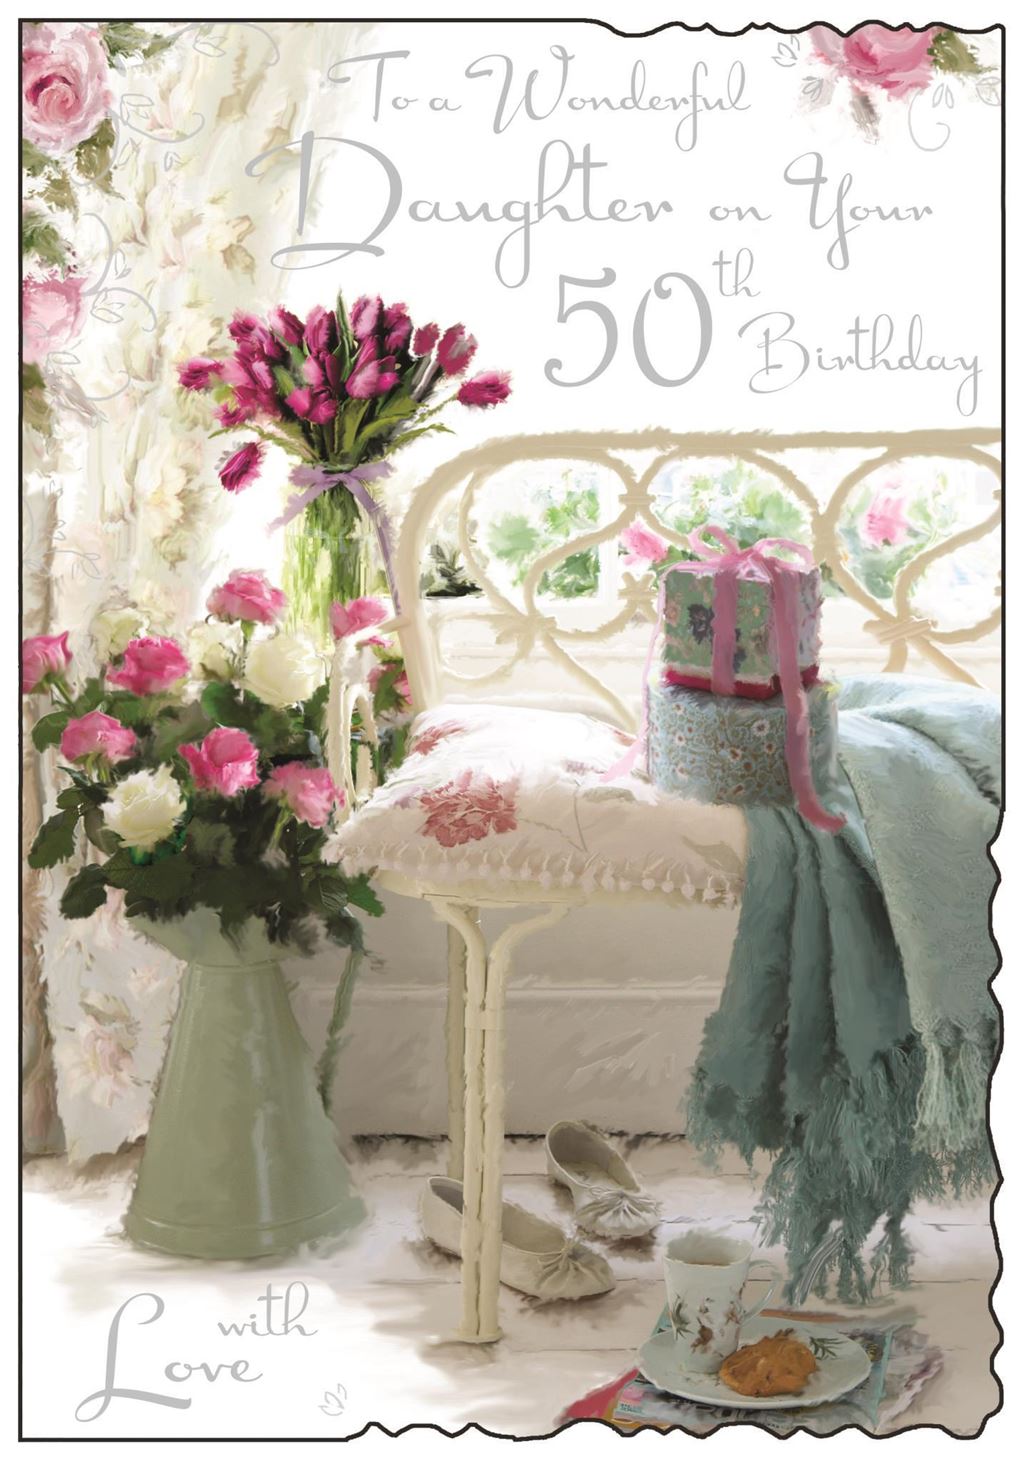 50th Wonderful Daughter Birthday Card